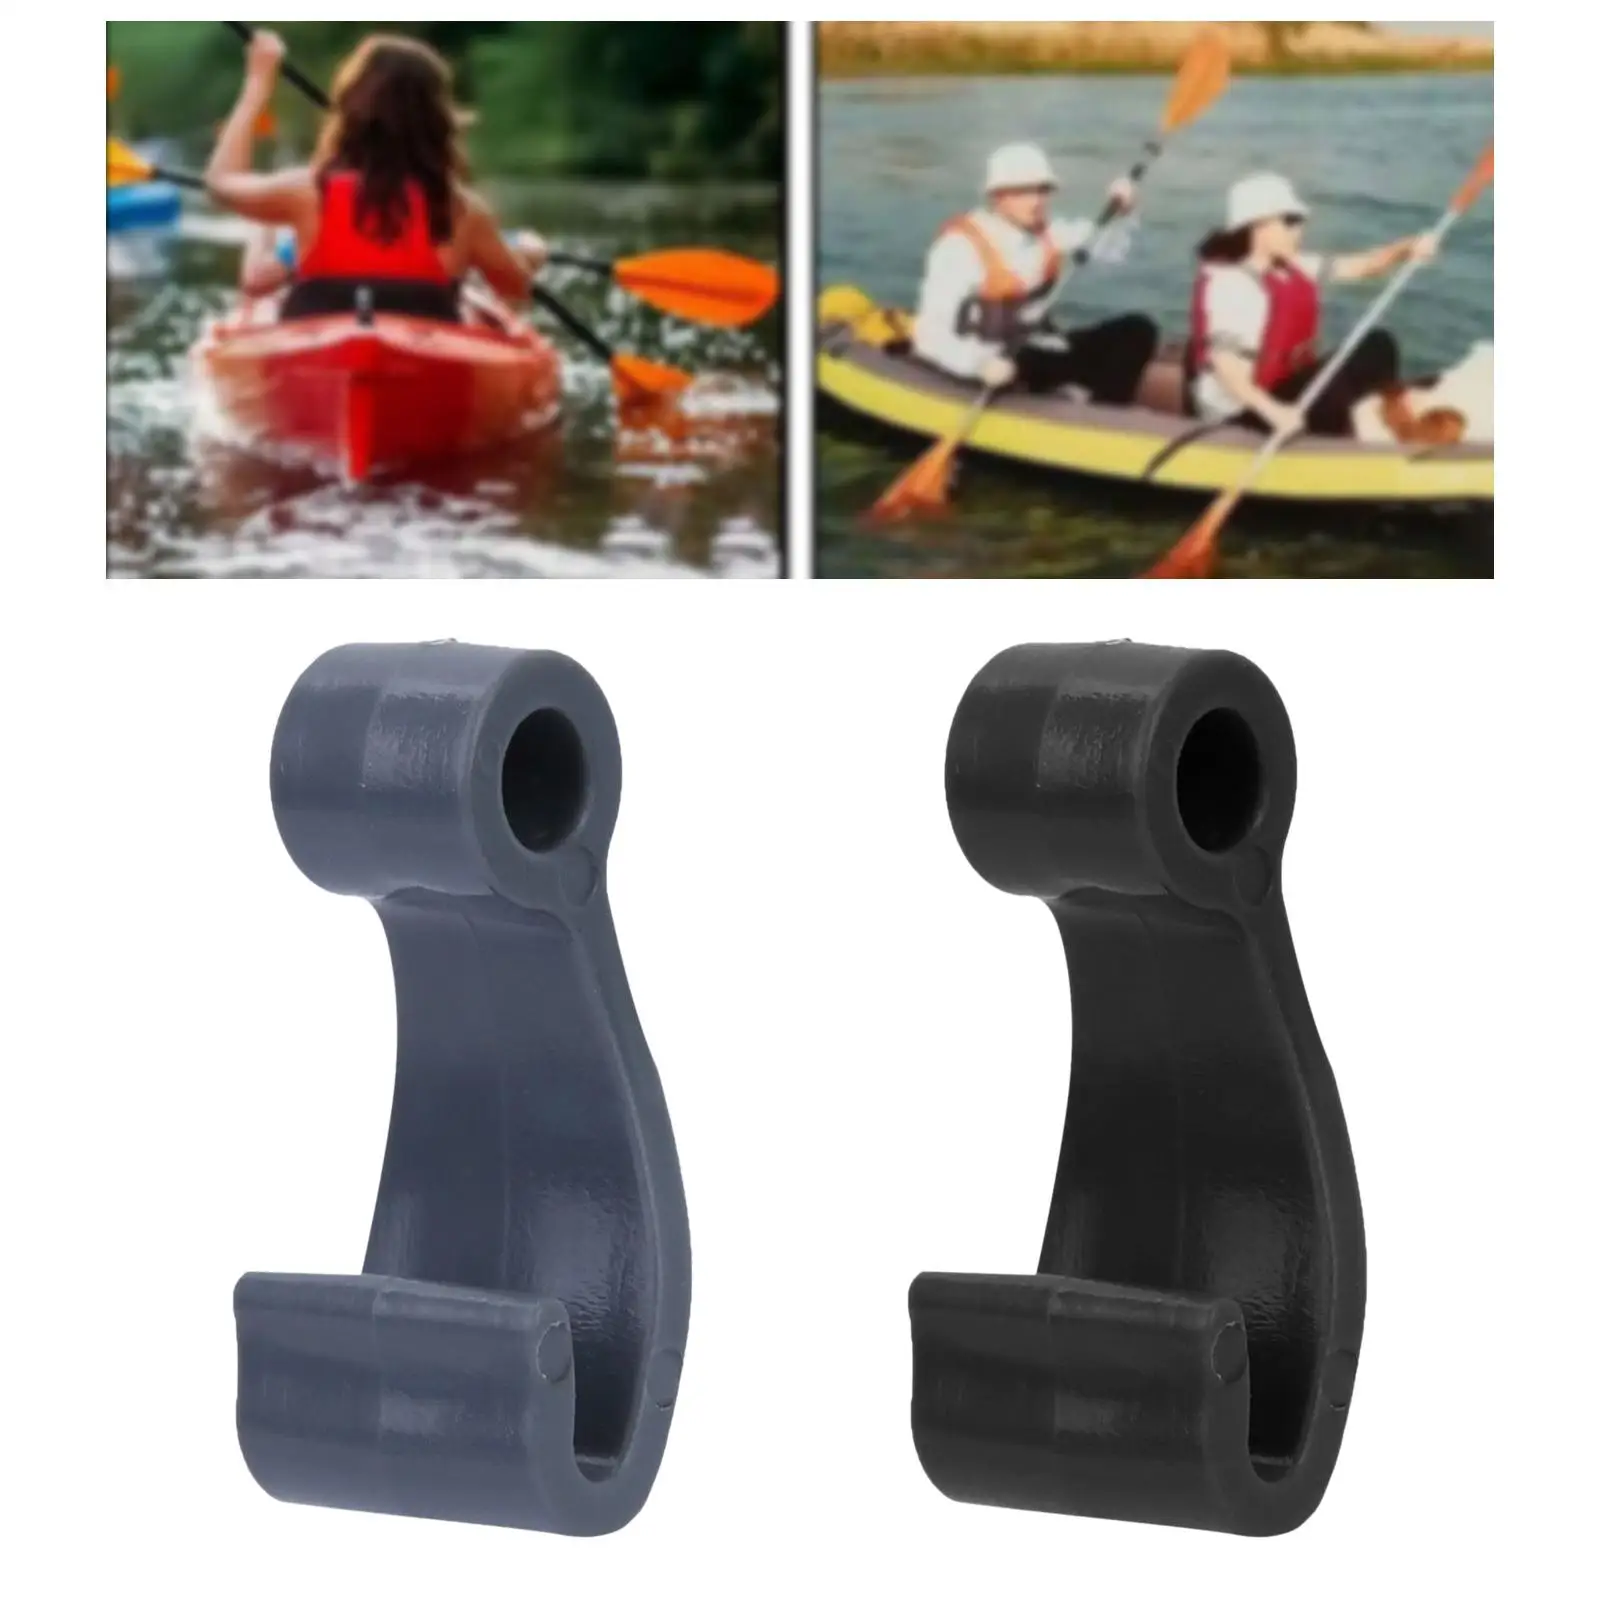 6x Kayak Bungee Cord Hooks J Shaped Hooks Portable Nylon Lashing Hook for Safety Kayak Accessory Bungee Cord Rowing Boat Paddle